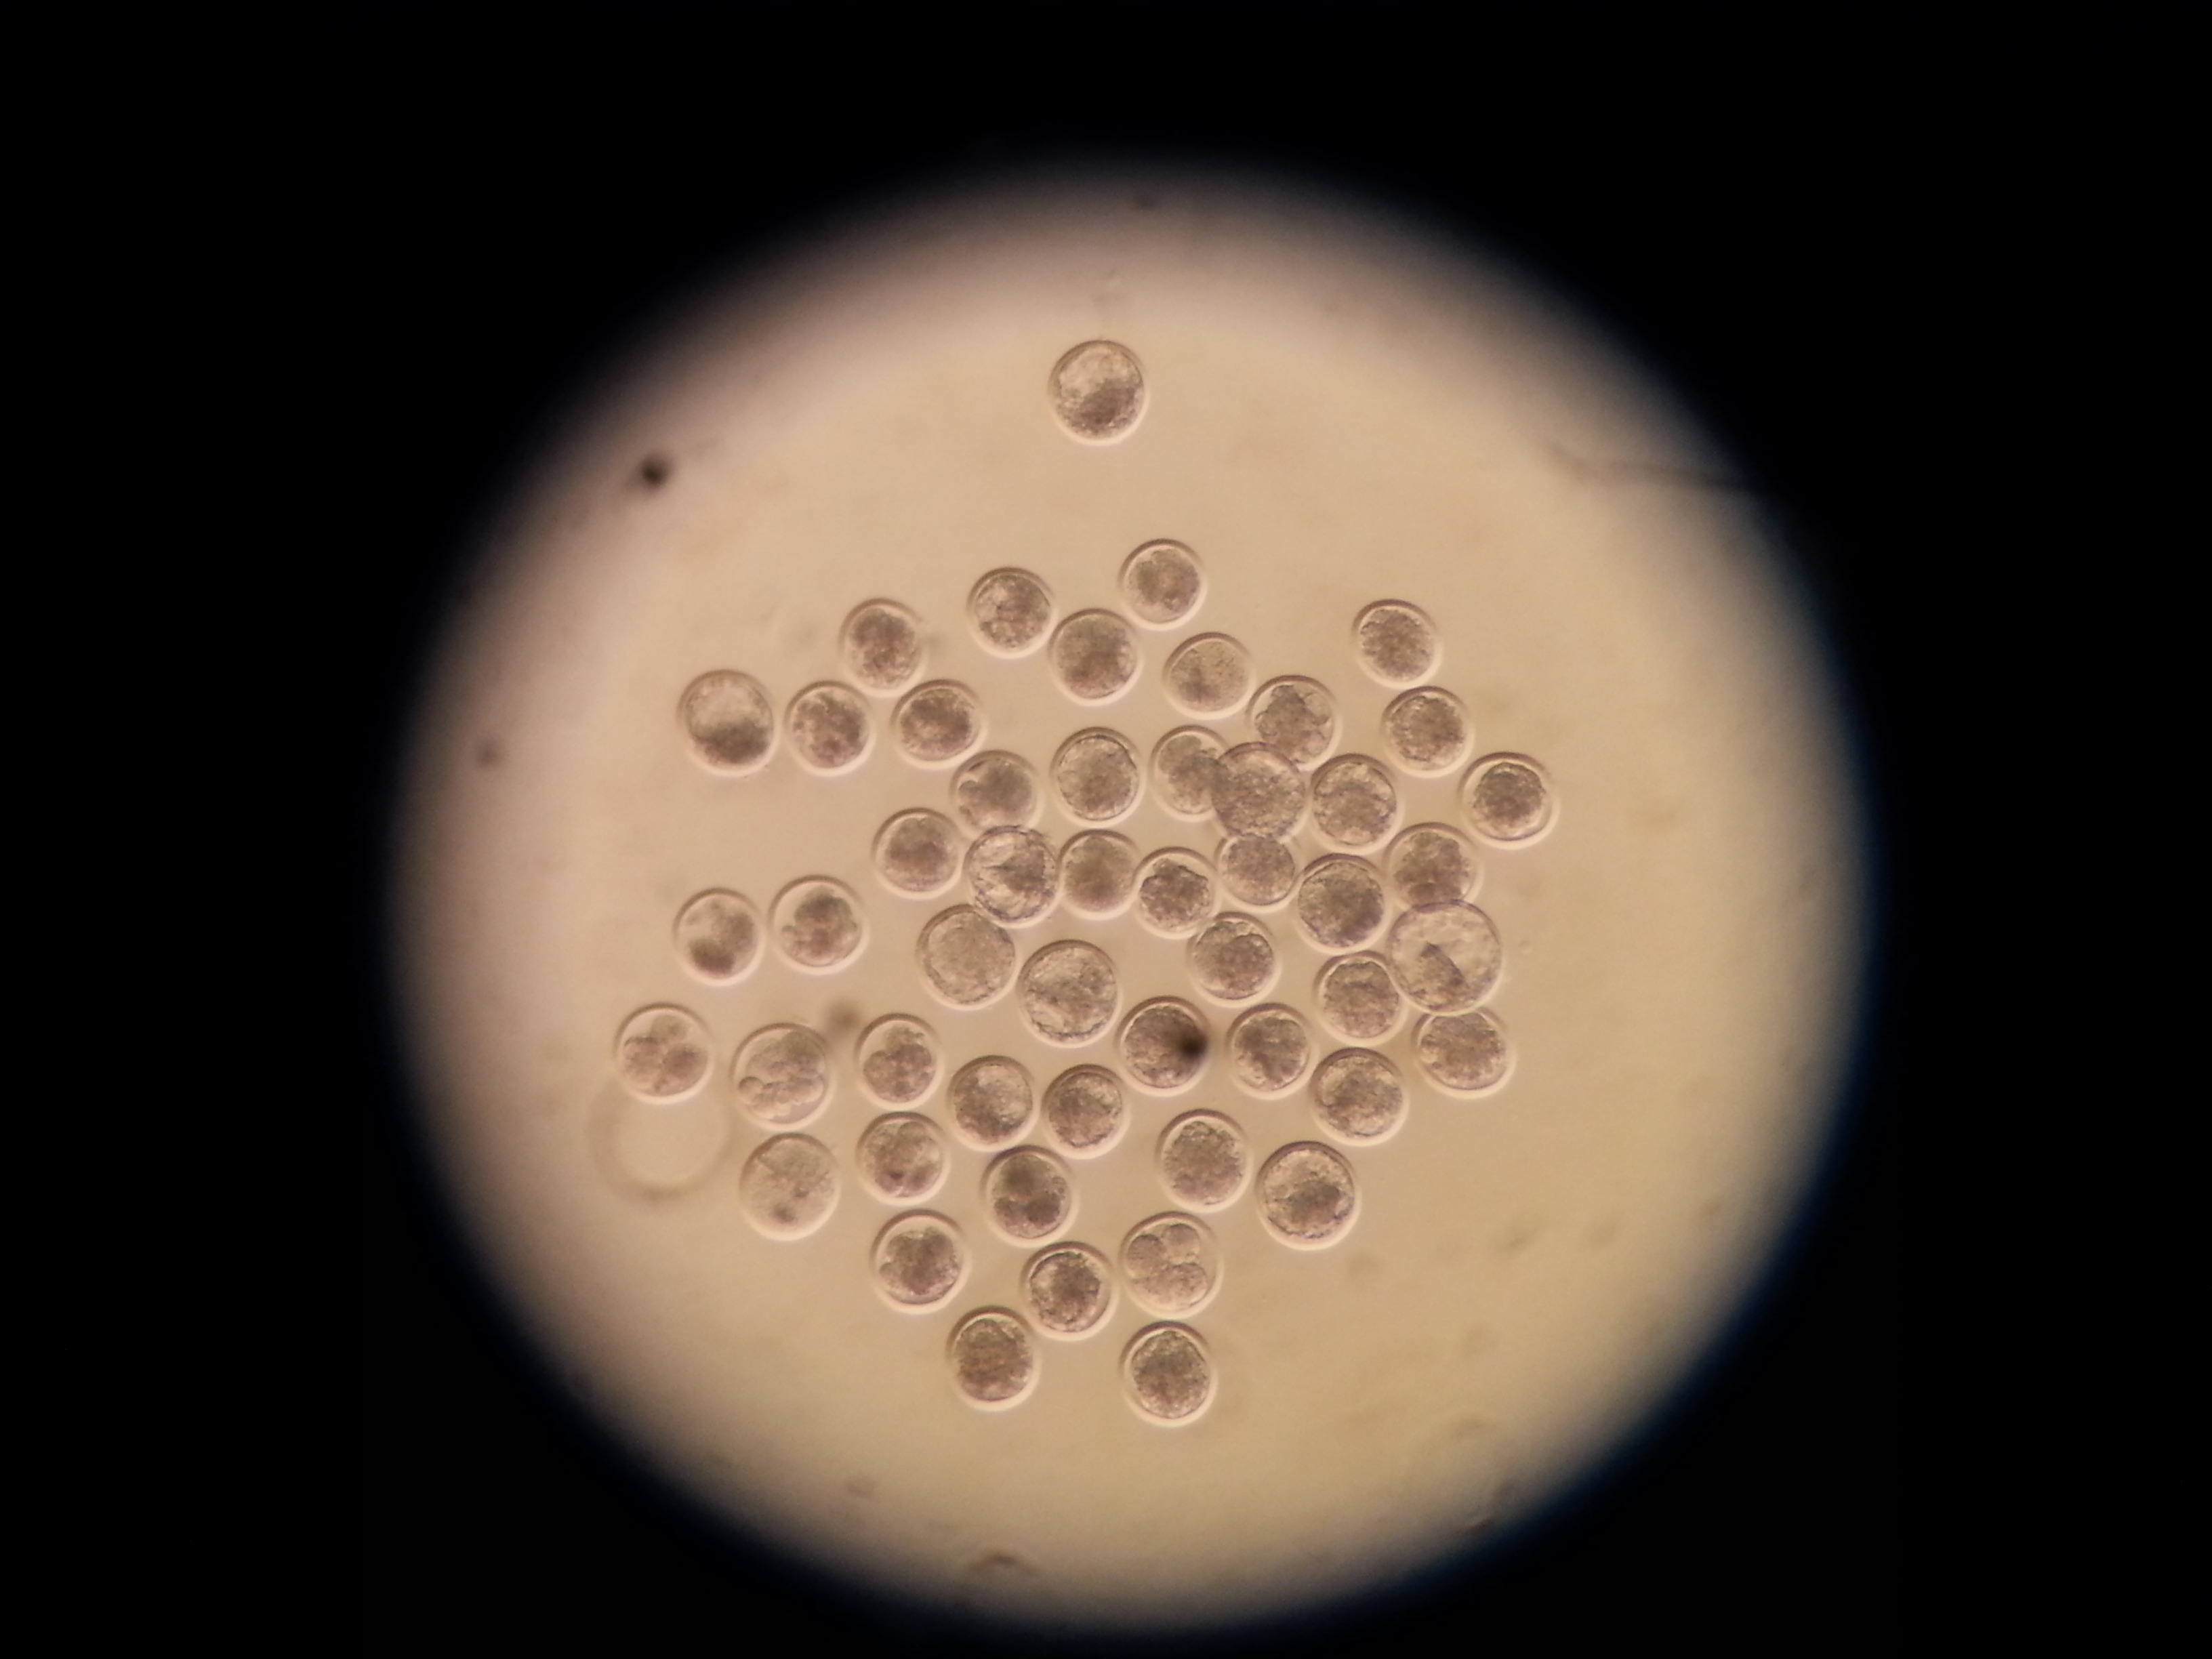 OPU embryo